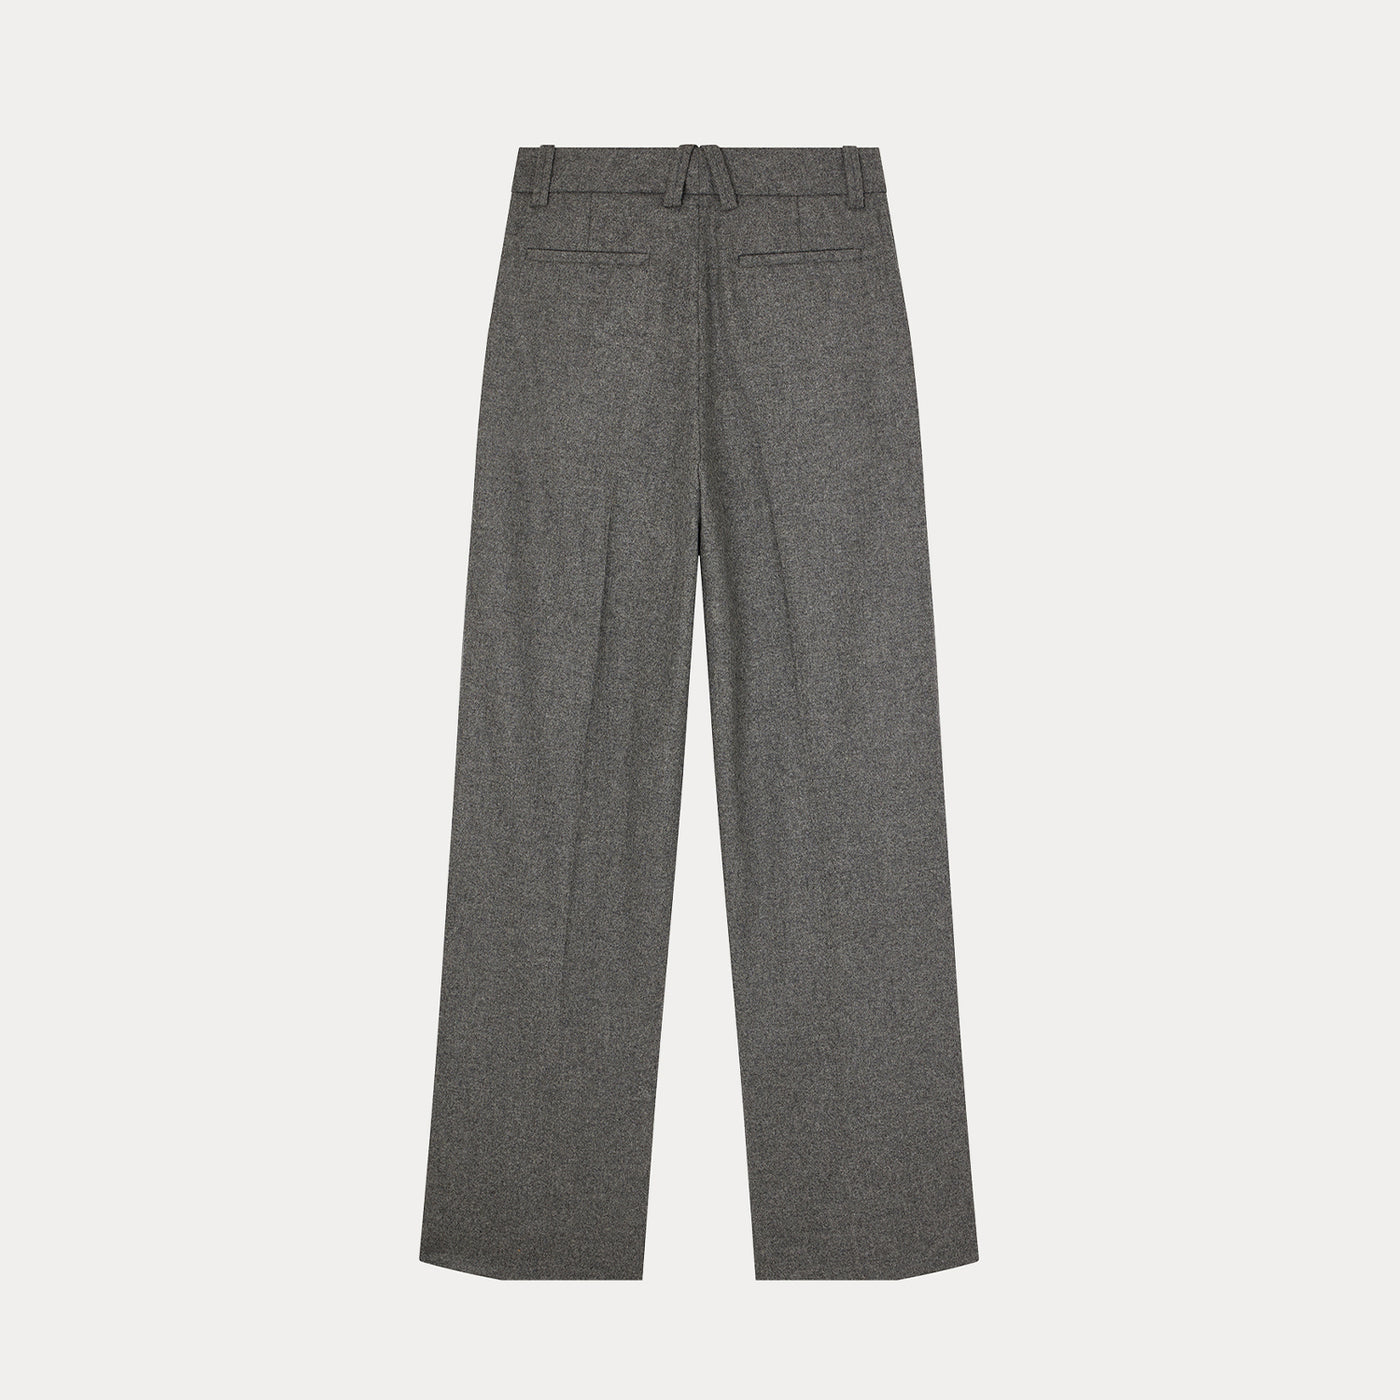 Pantalon Marleborne gris chiné